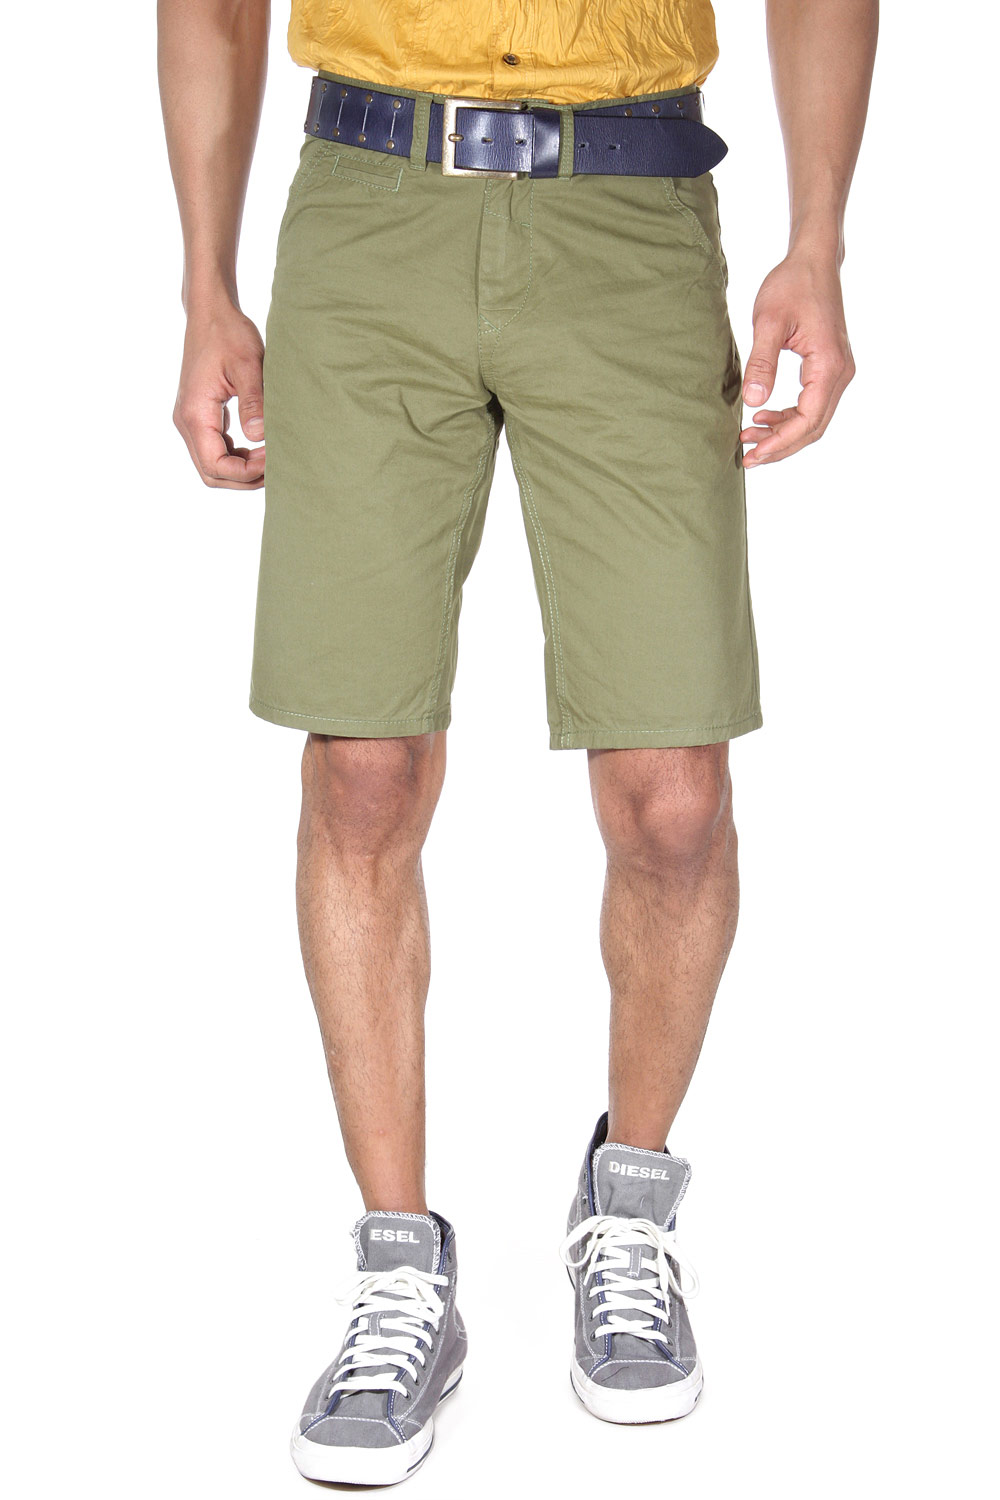 BLEND chino shorts regular fit at oboy.com